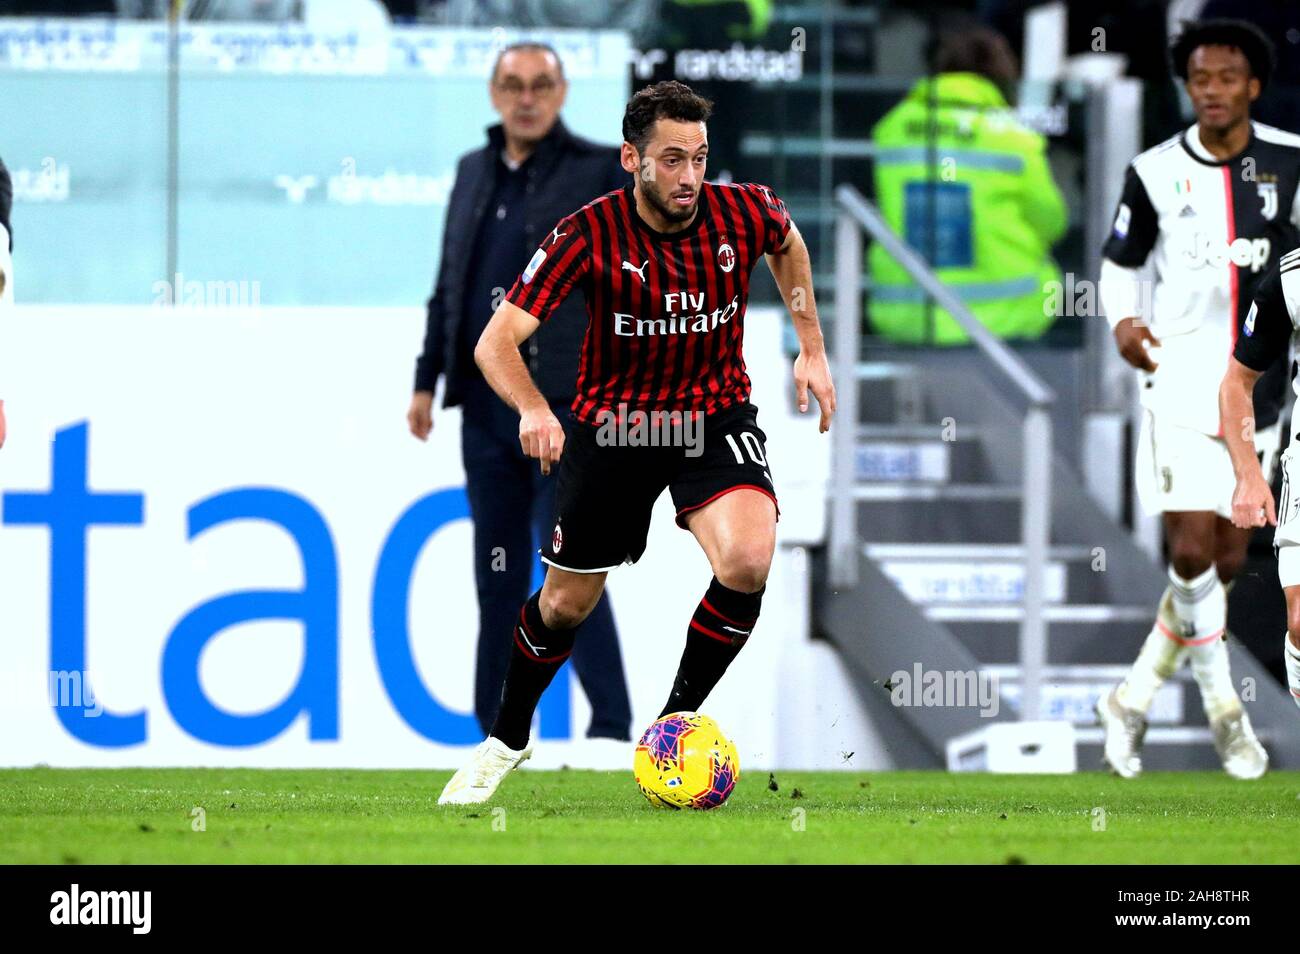 Turin, ITALIE - 10 novembre 2019: Hakan Calhanoglu en action pendant la série A 2019/2020 JUVENTUS / MILAN au stade Allianz. Banque D'Images